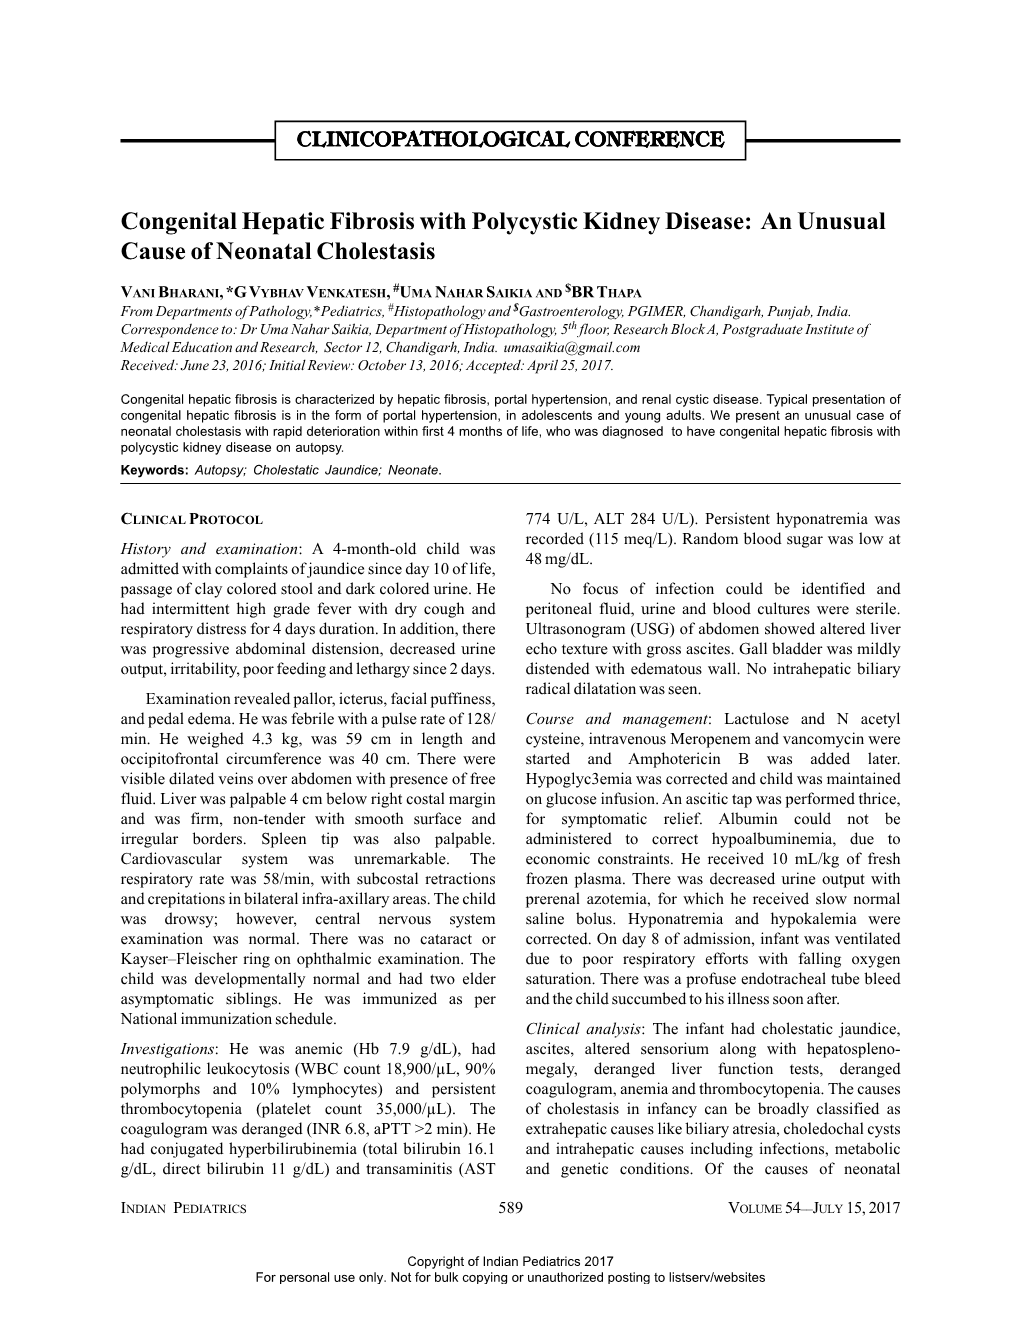 Congenital Hepatic Fibrosis with Polycystic Kidney Disease: an Unusual Cause of Neonatal Cholestasis